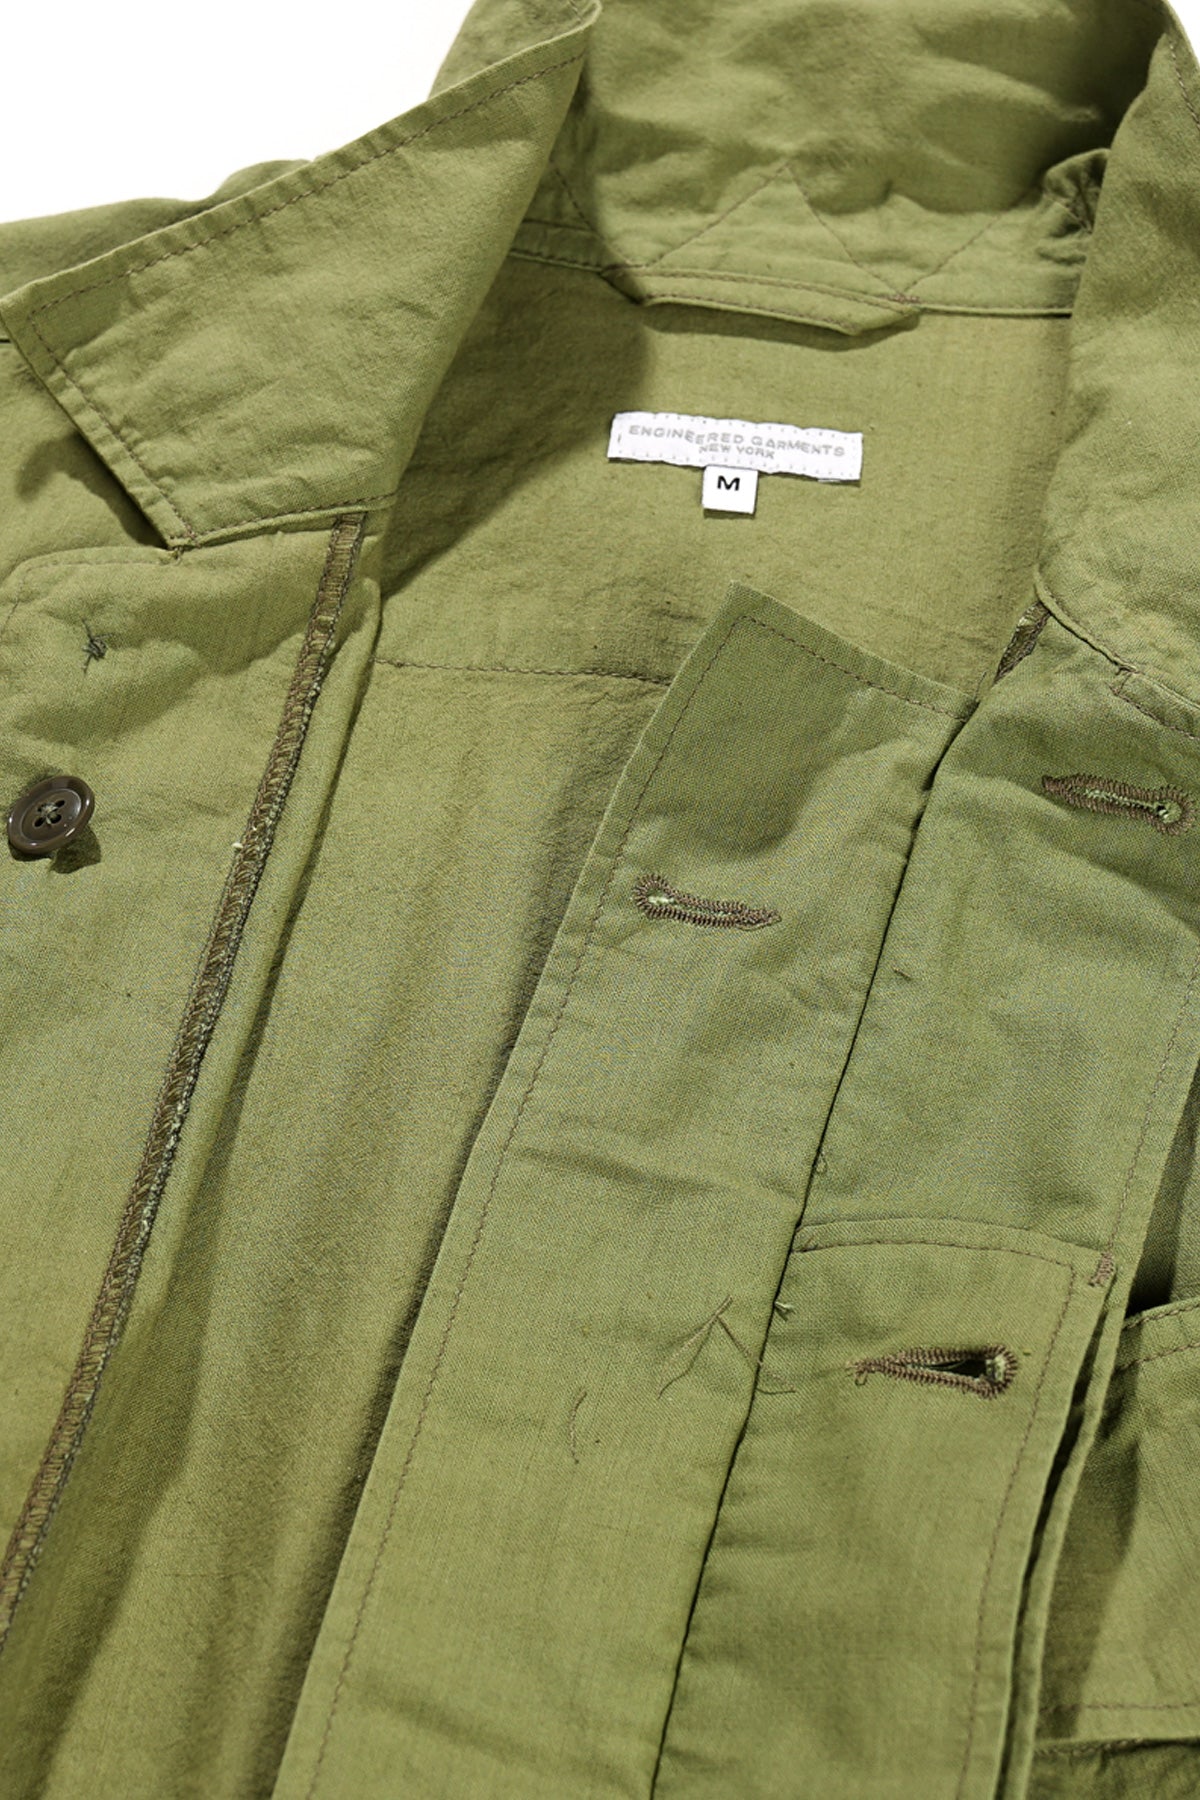 engineered garments jungle fatigue JKT-